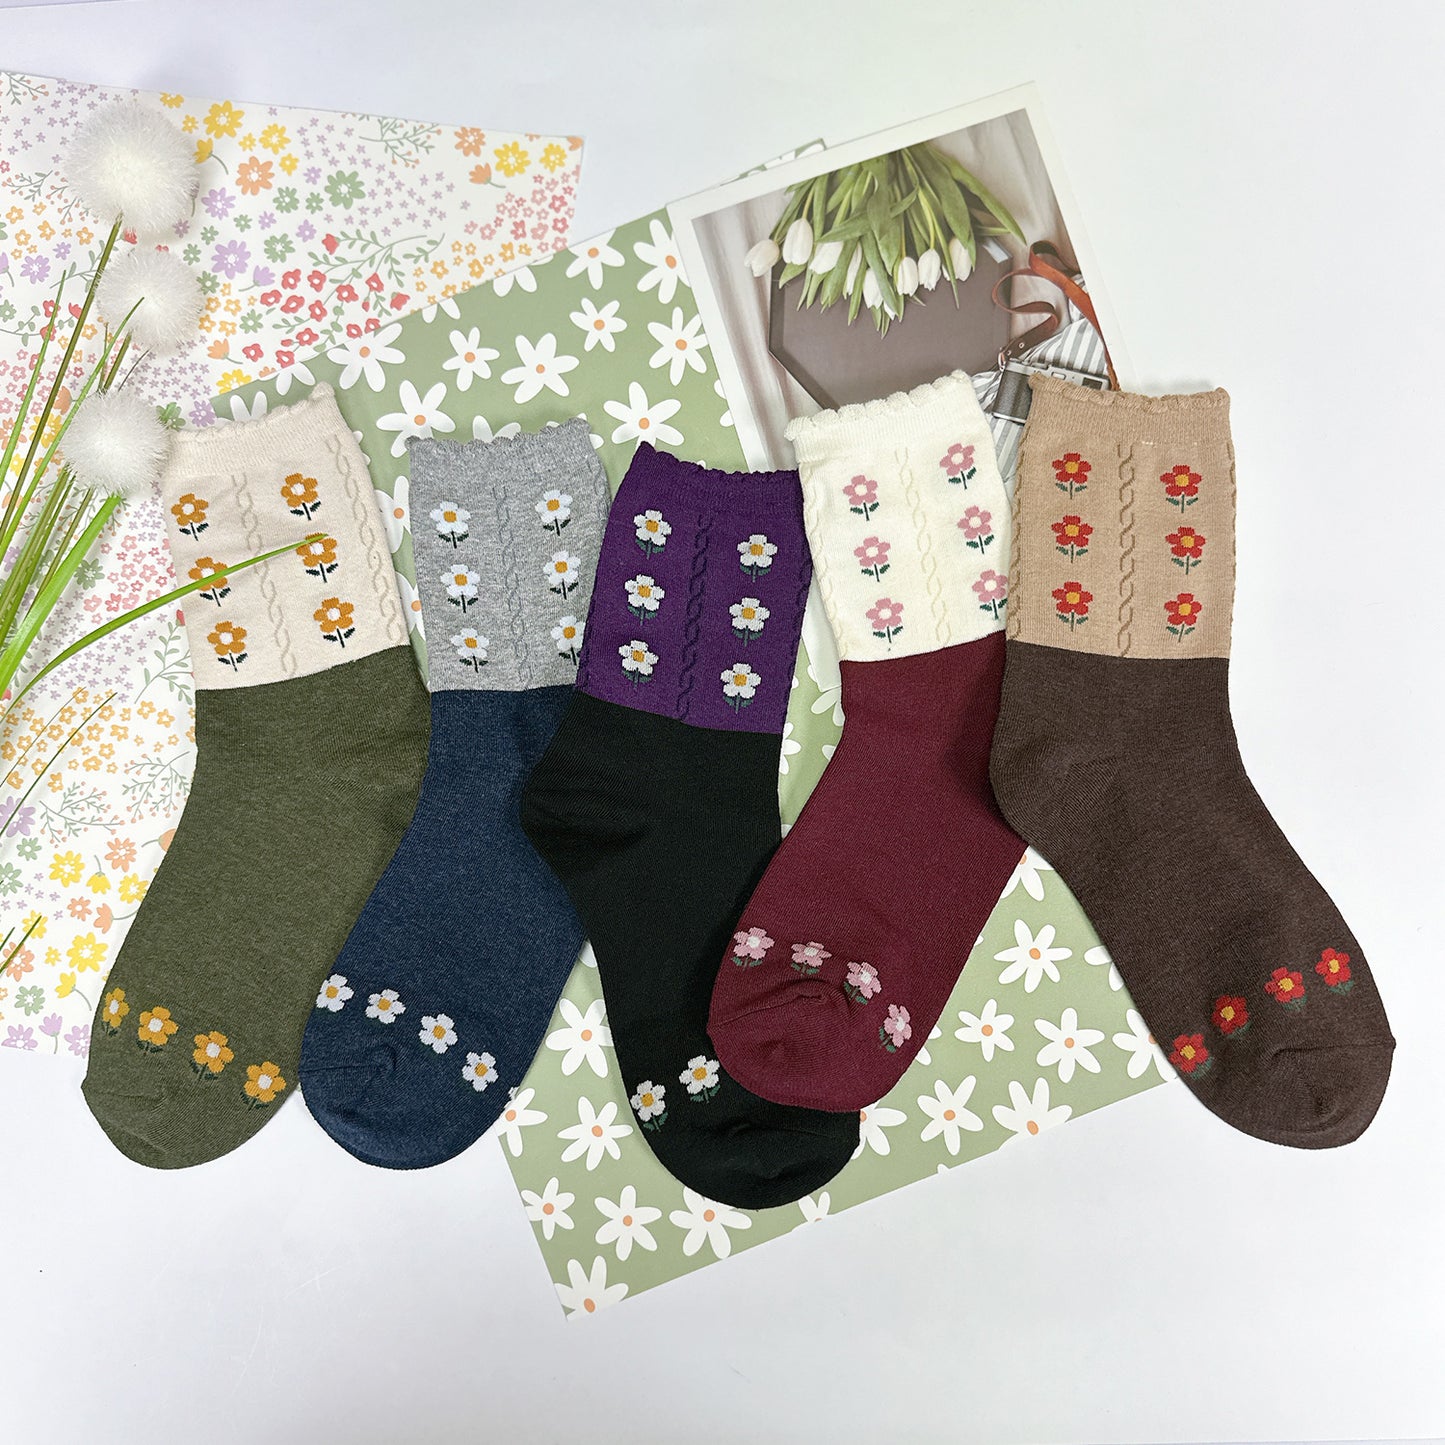 Women's Picot Flower Pattern Crew Socks